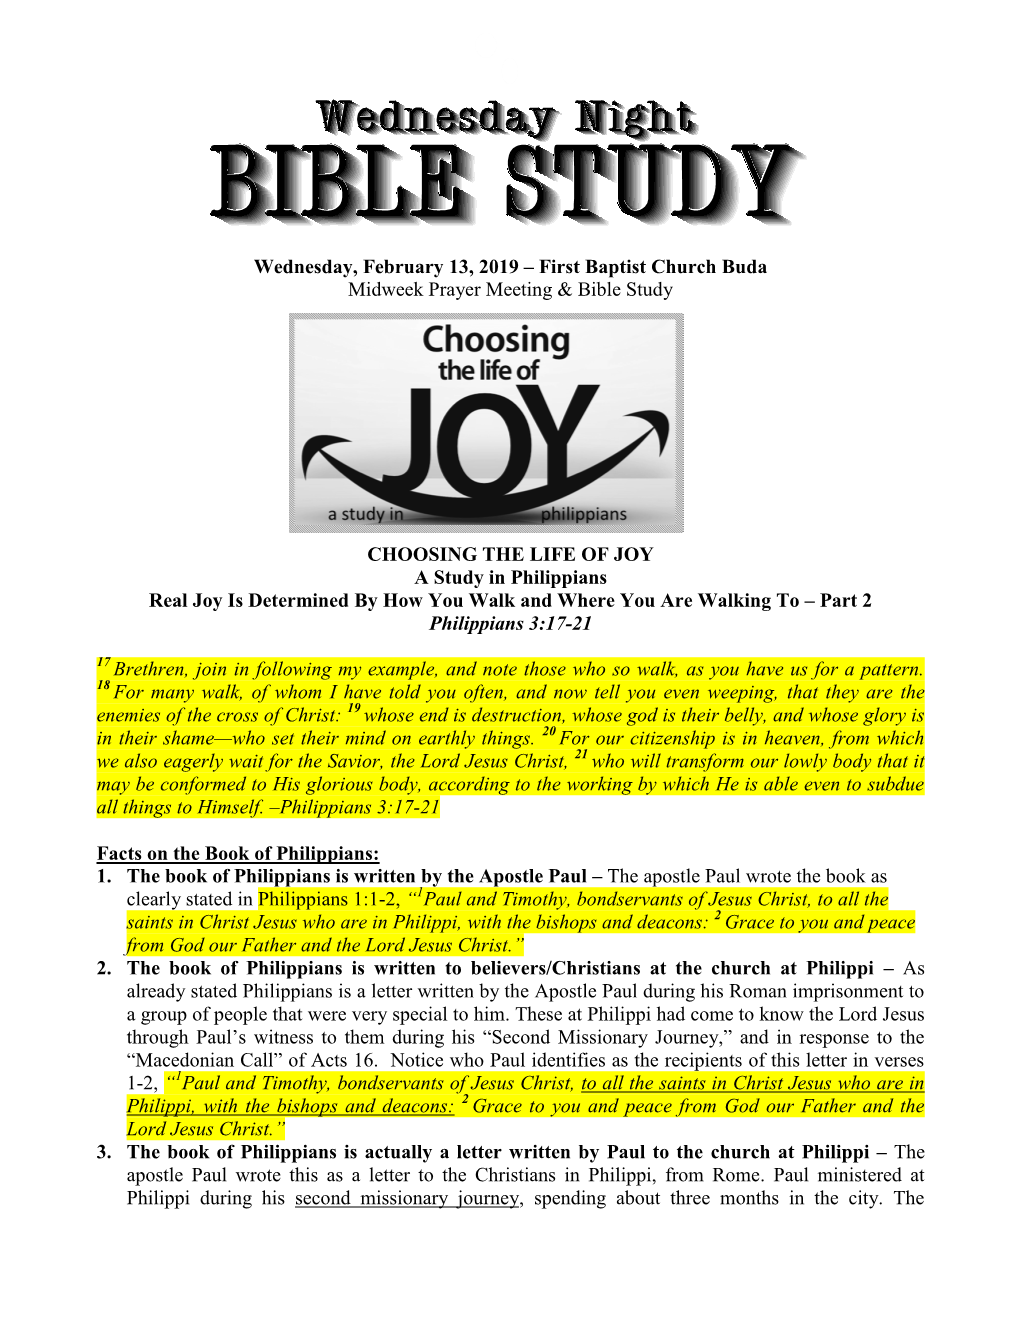 FBC Buda Bible Study 2.13.19.Choosing the Life of Joy.Real Joy Is Determined By